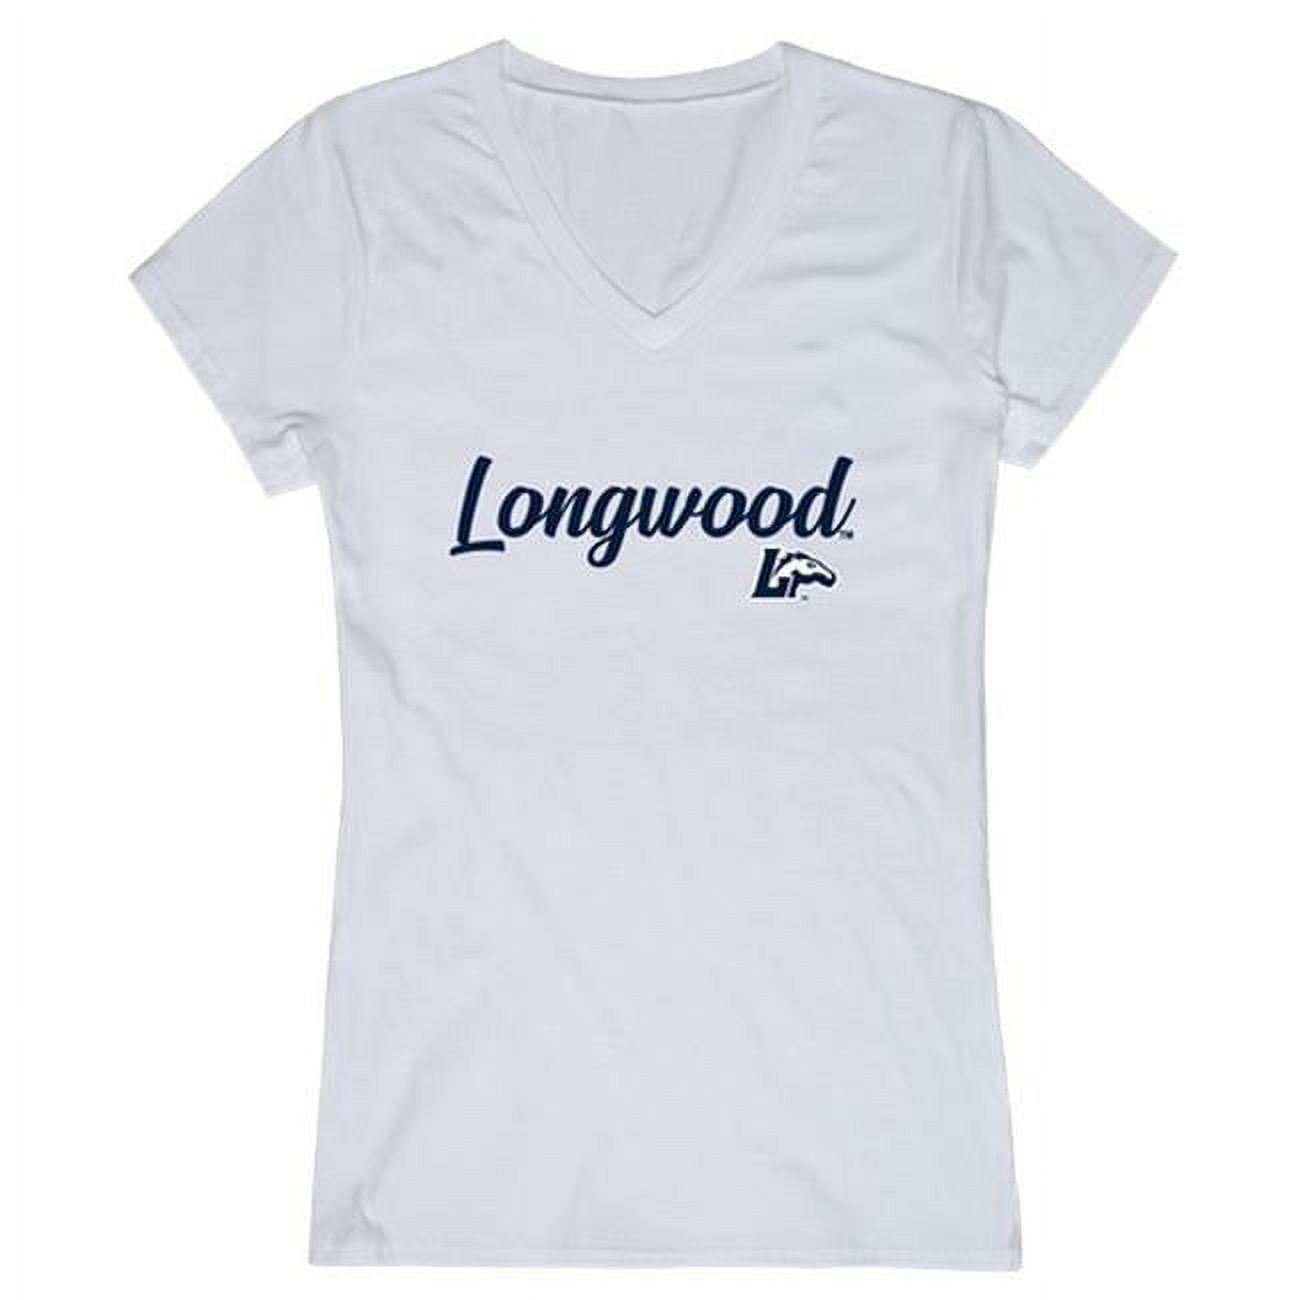 W Republic 555-330-HGY-04 Longwood University Script T-Shirt for Women, Heather  Grey - Extra Large